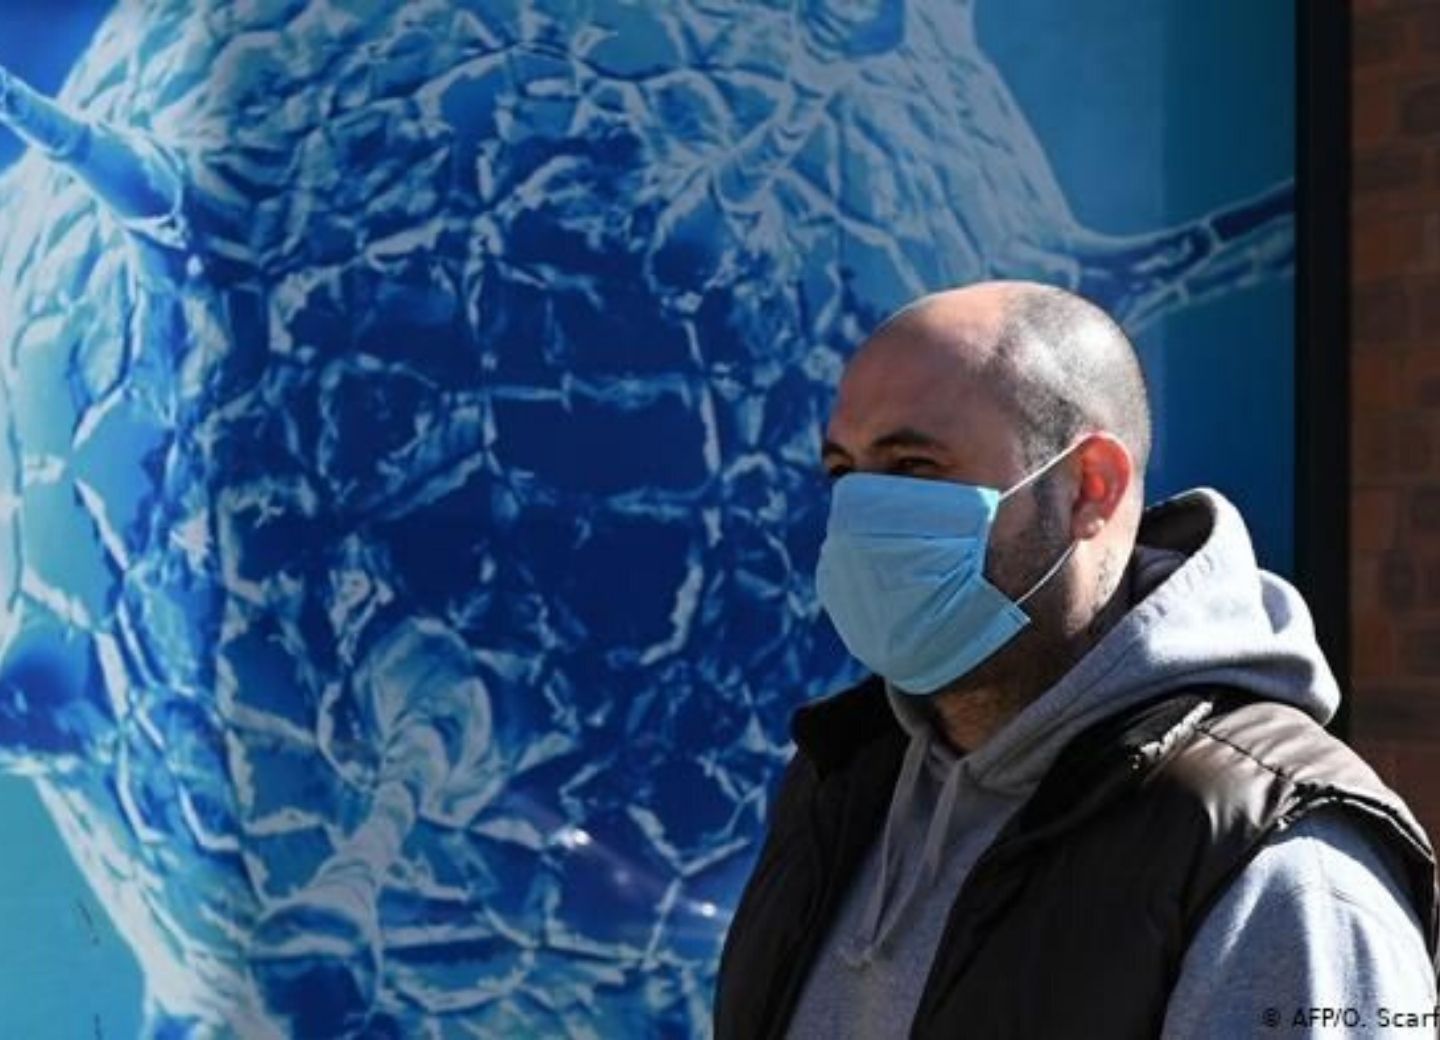 Европол: пандемия коронавируса спровоцировала волну преступлений  